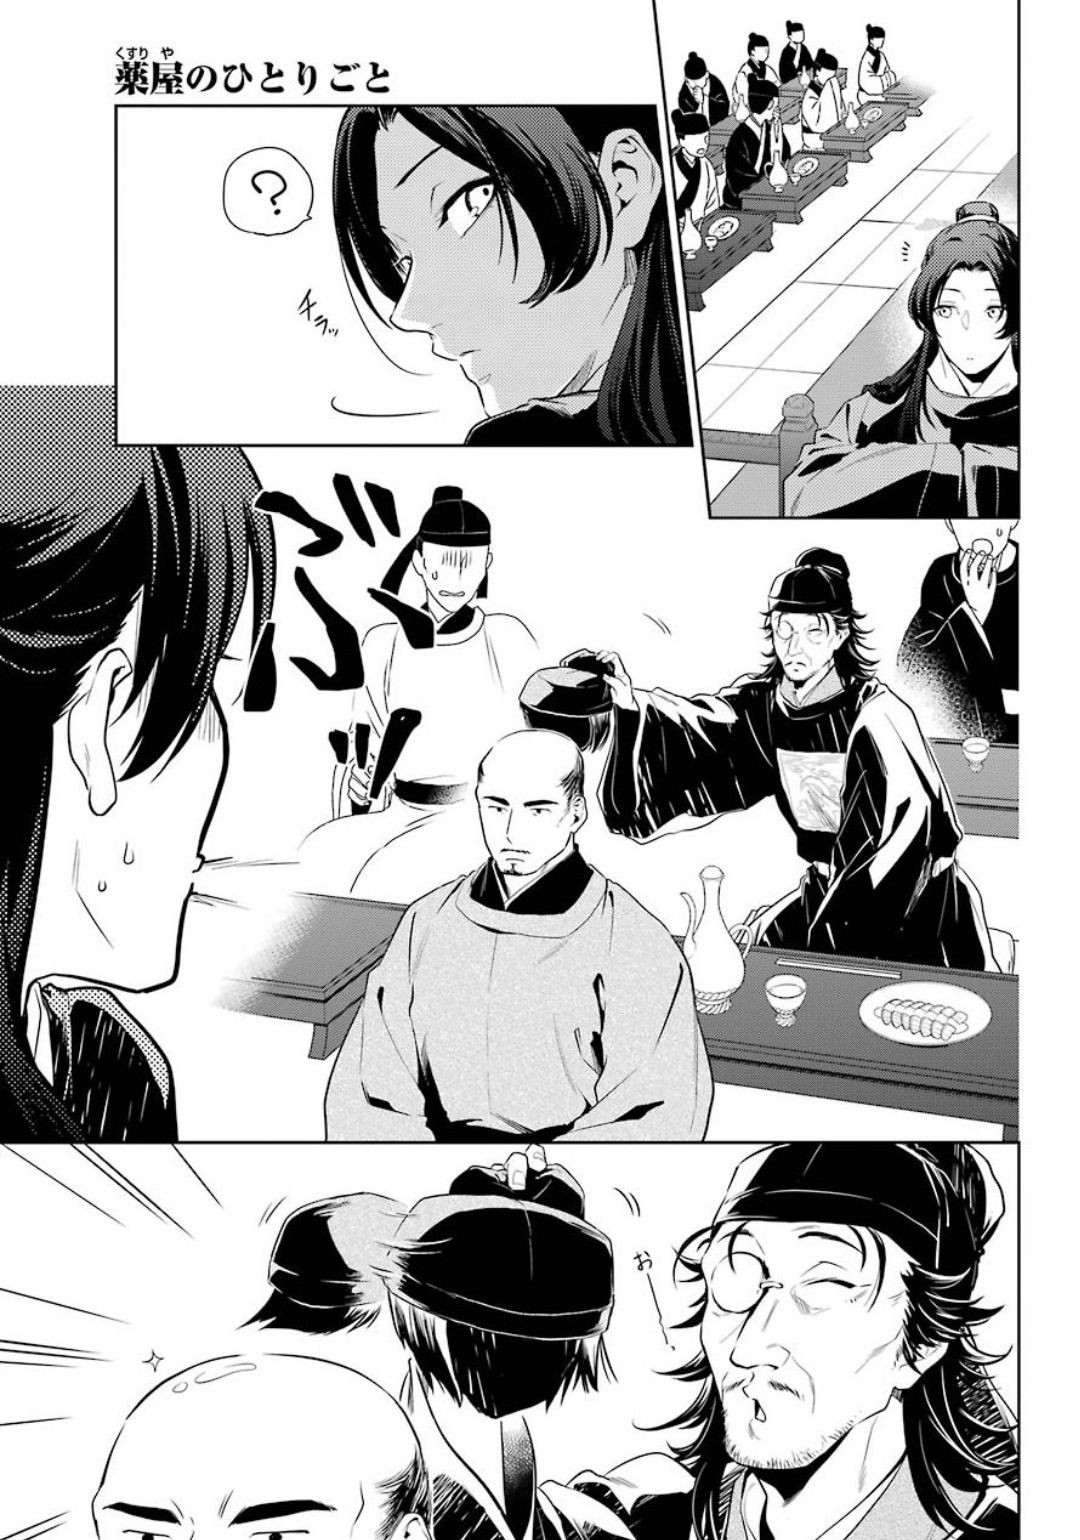 Kusuriya no Hitorigoto - Chapter 36-2 - Page 4